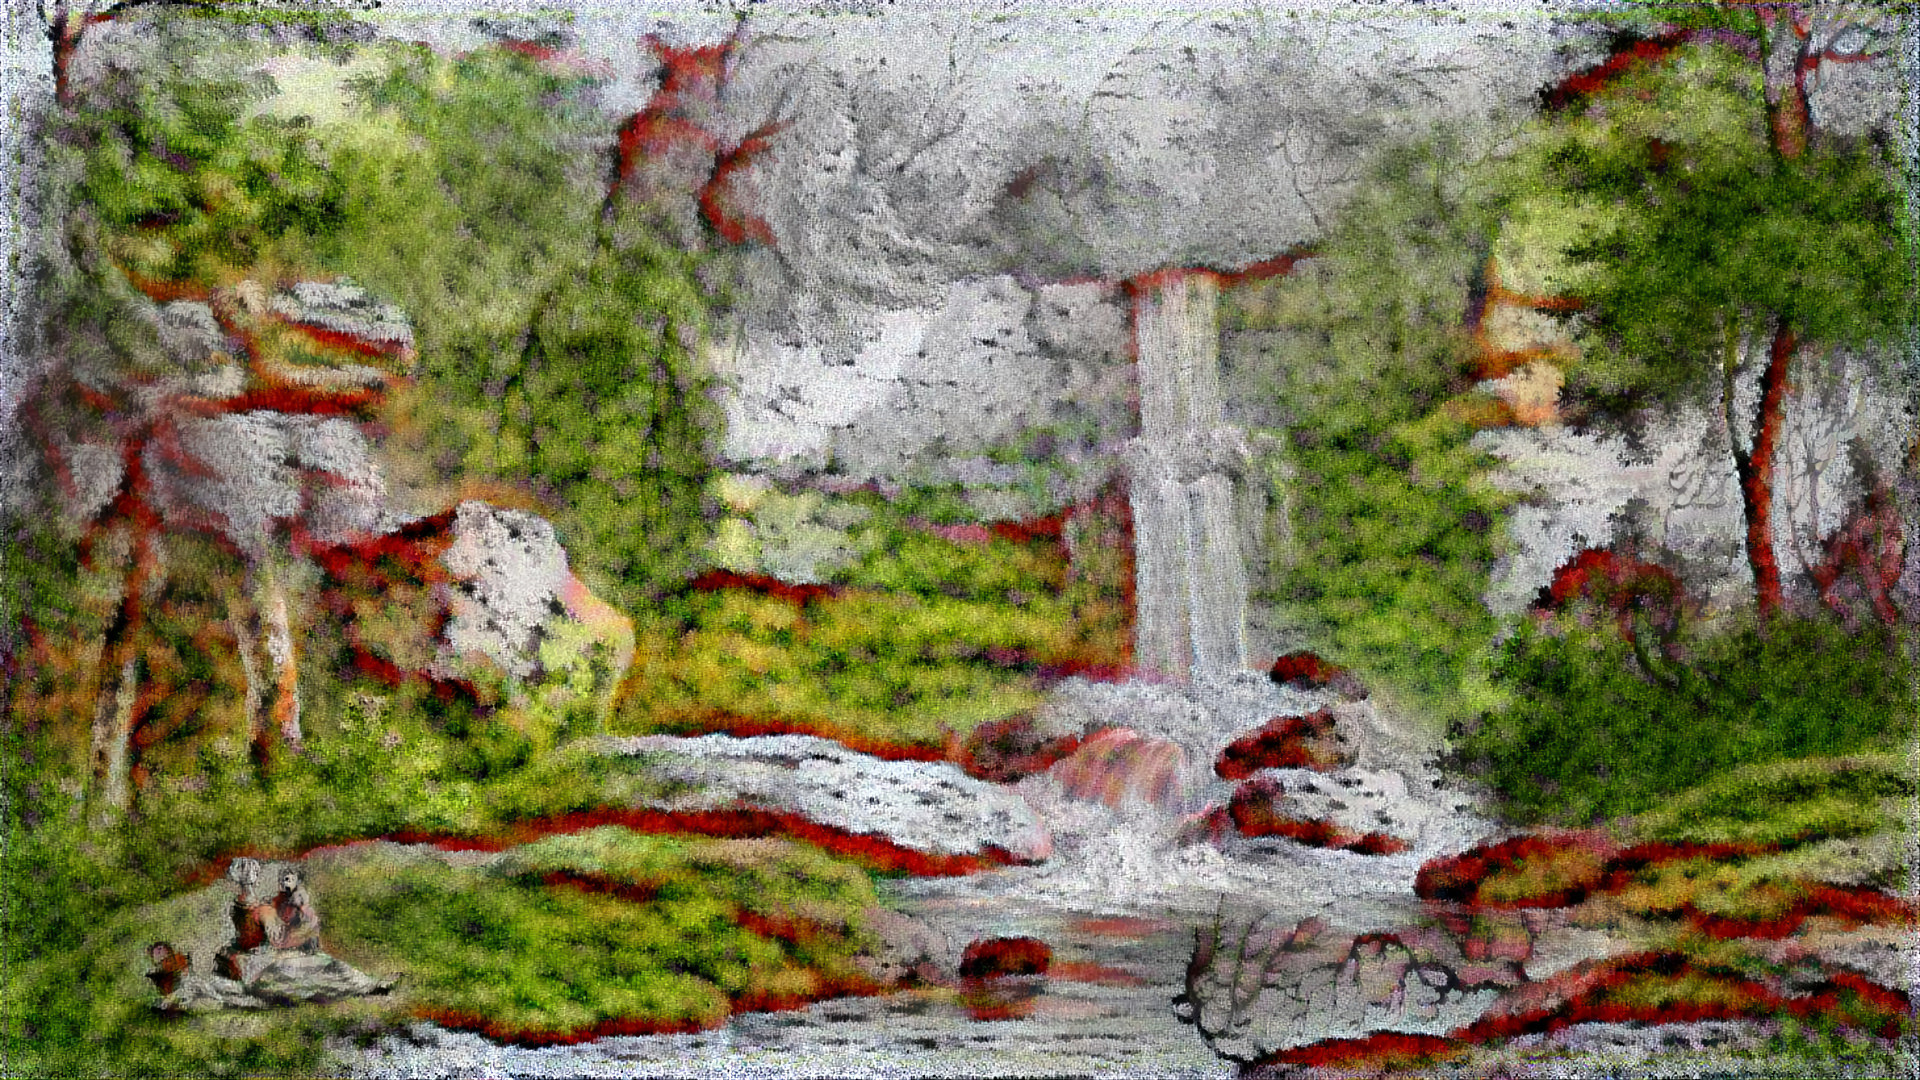 Waterfall No. 2